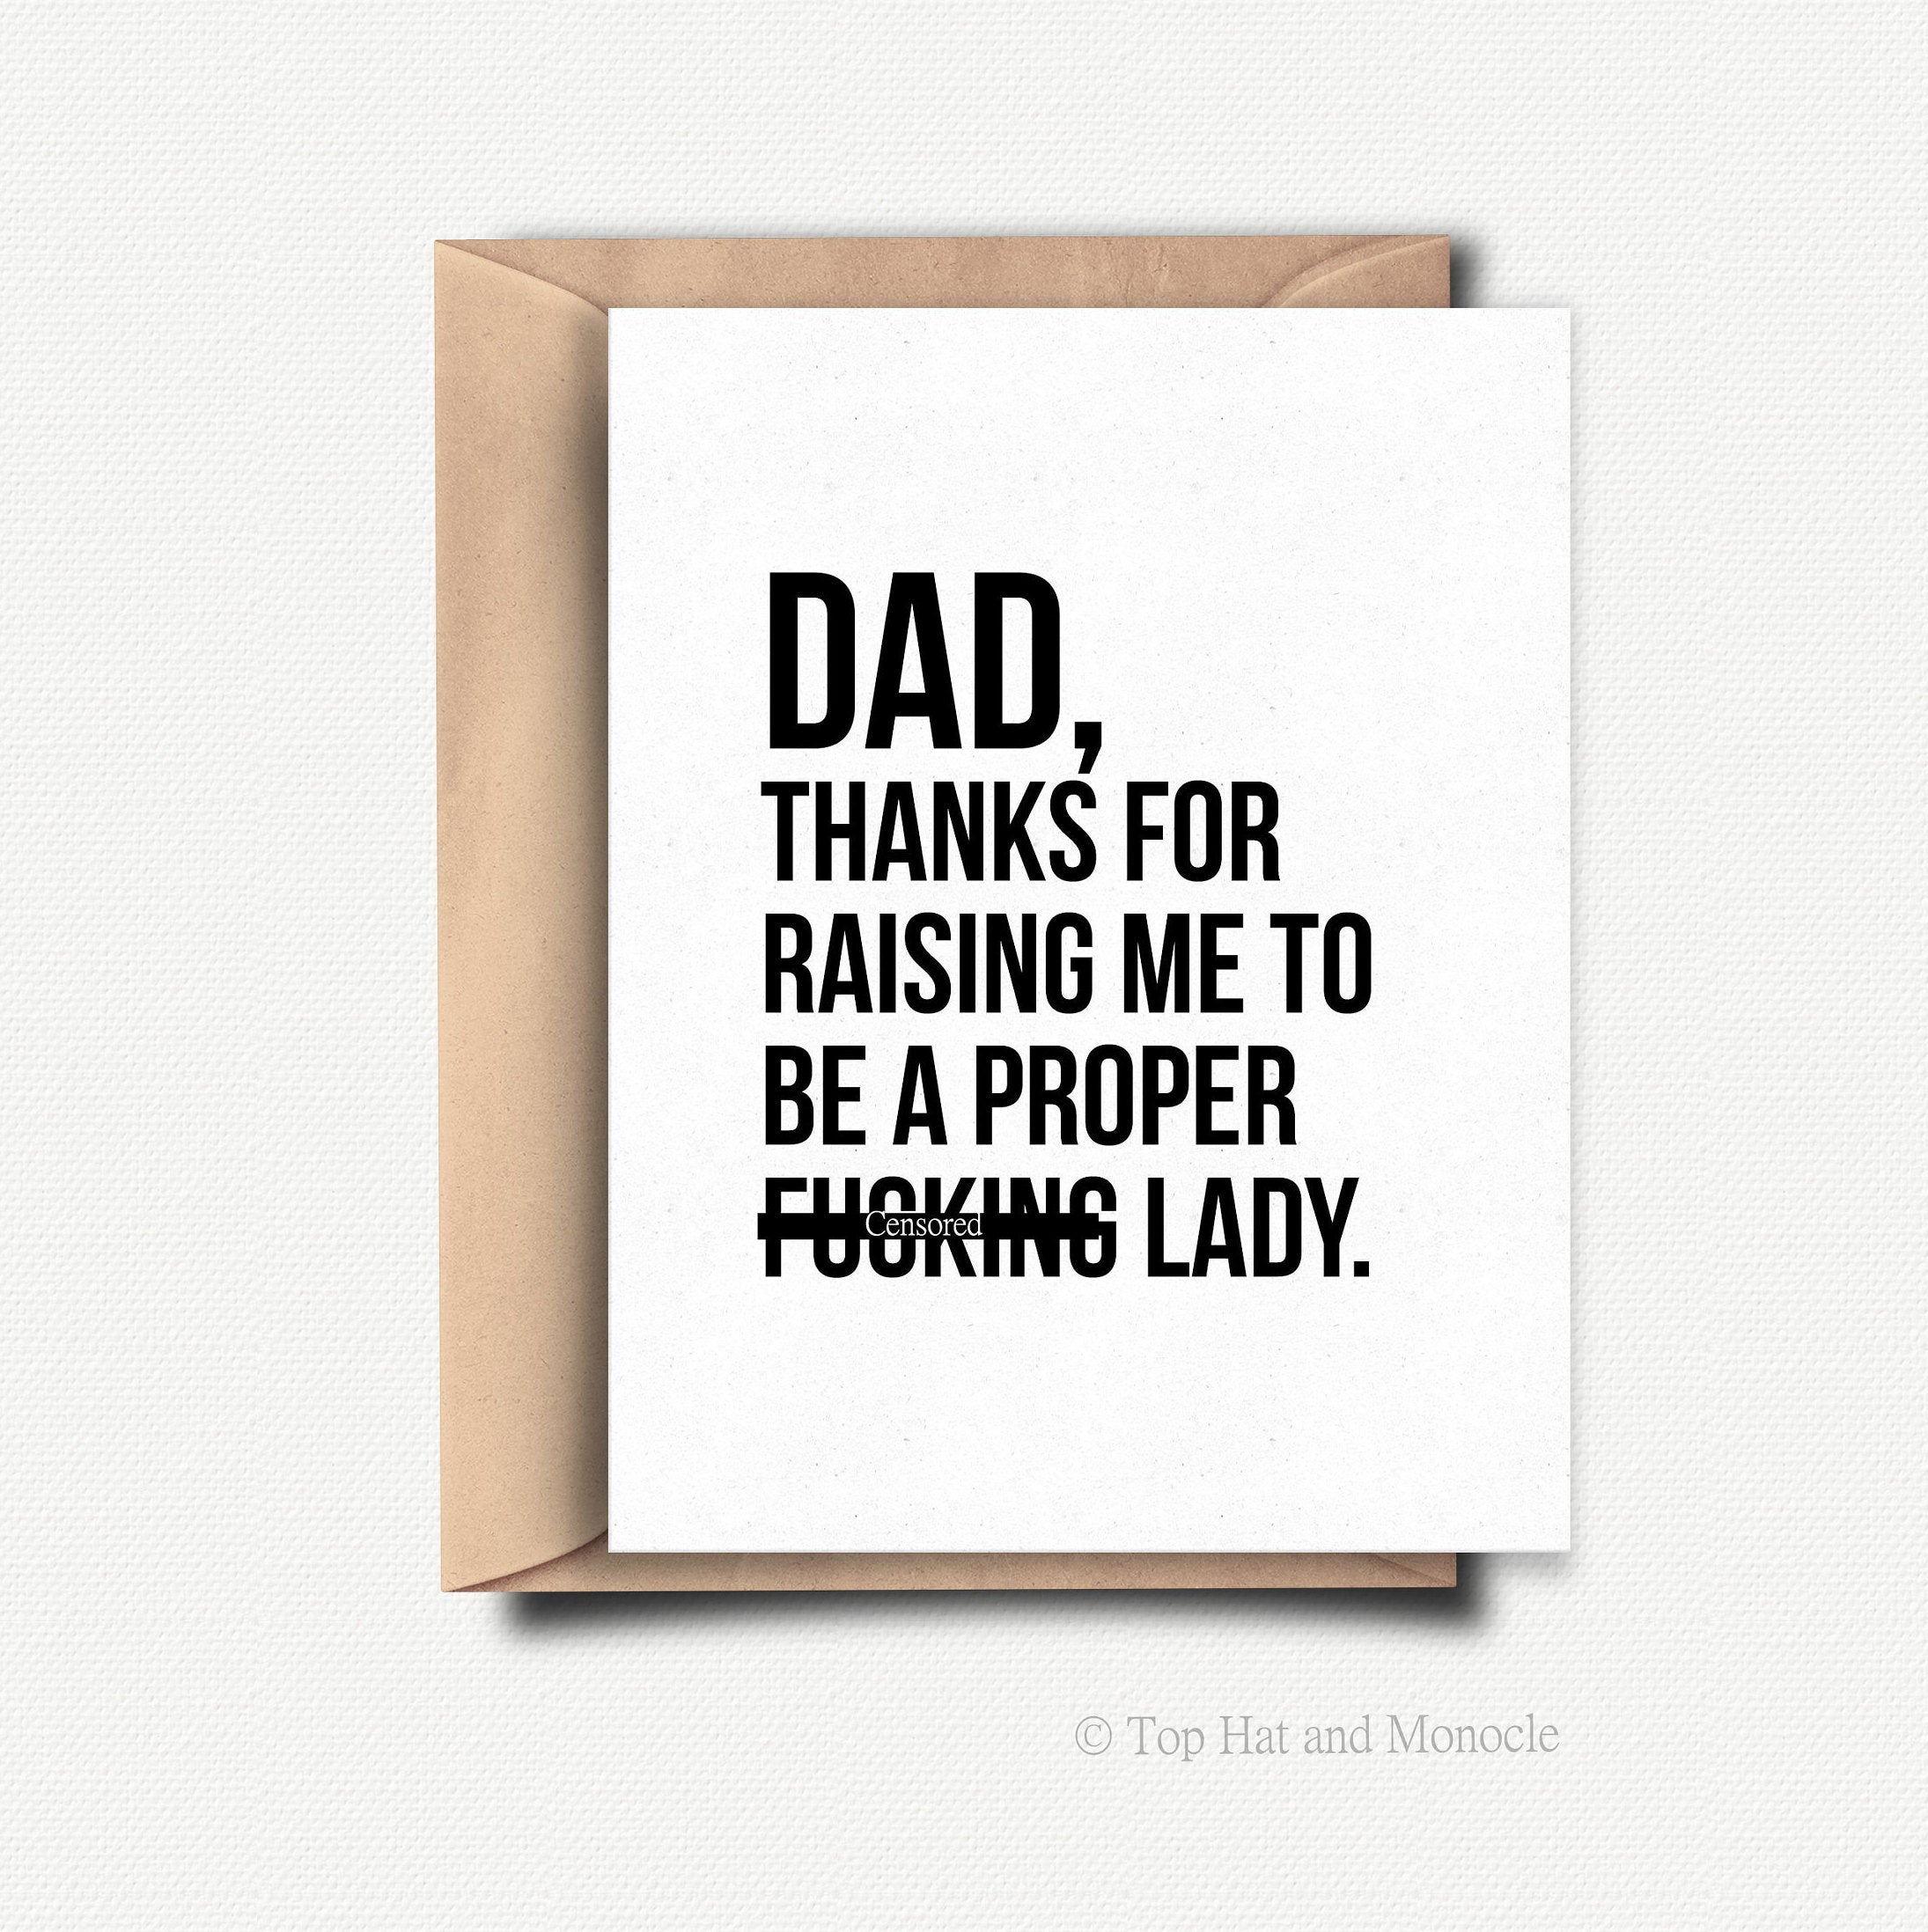 Funny Birthday Card Ideas For Dad Funny Fathers Day Card Funny Fathers Day Gift From Daughter Funny Fathers Day Gift Ideas For Dad Birthday Card From Daughter Dad Card